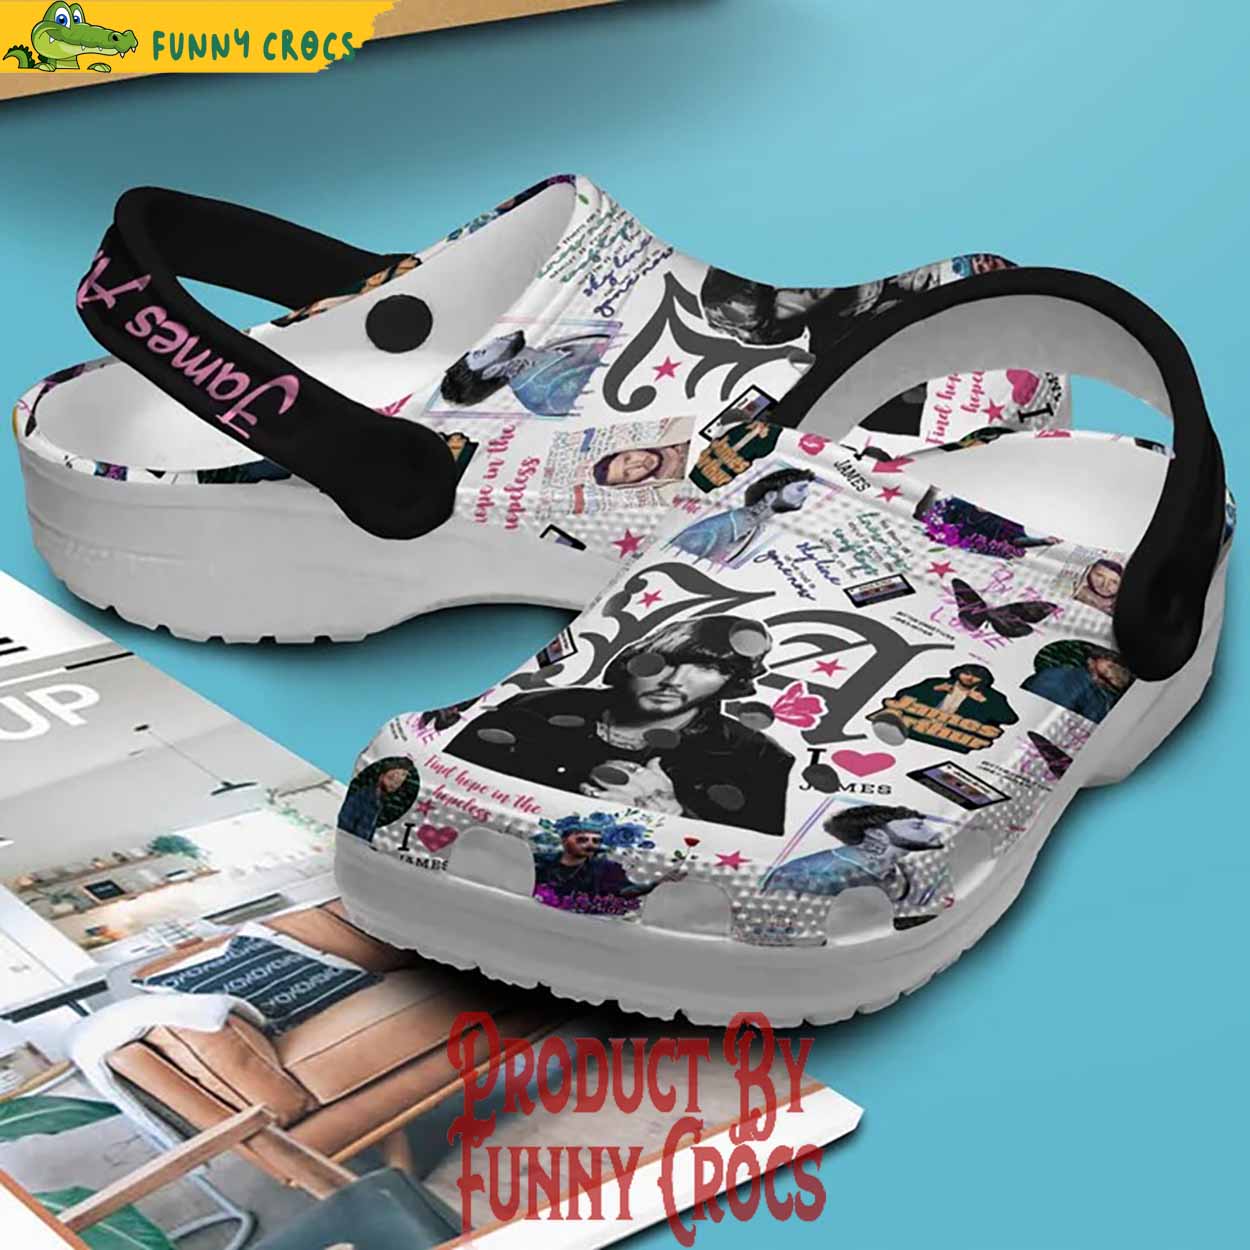 James ArThur Singer Crocs Shoes - Discover Comfort And Style Clog Shoes ...